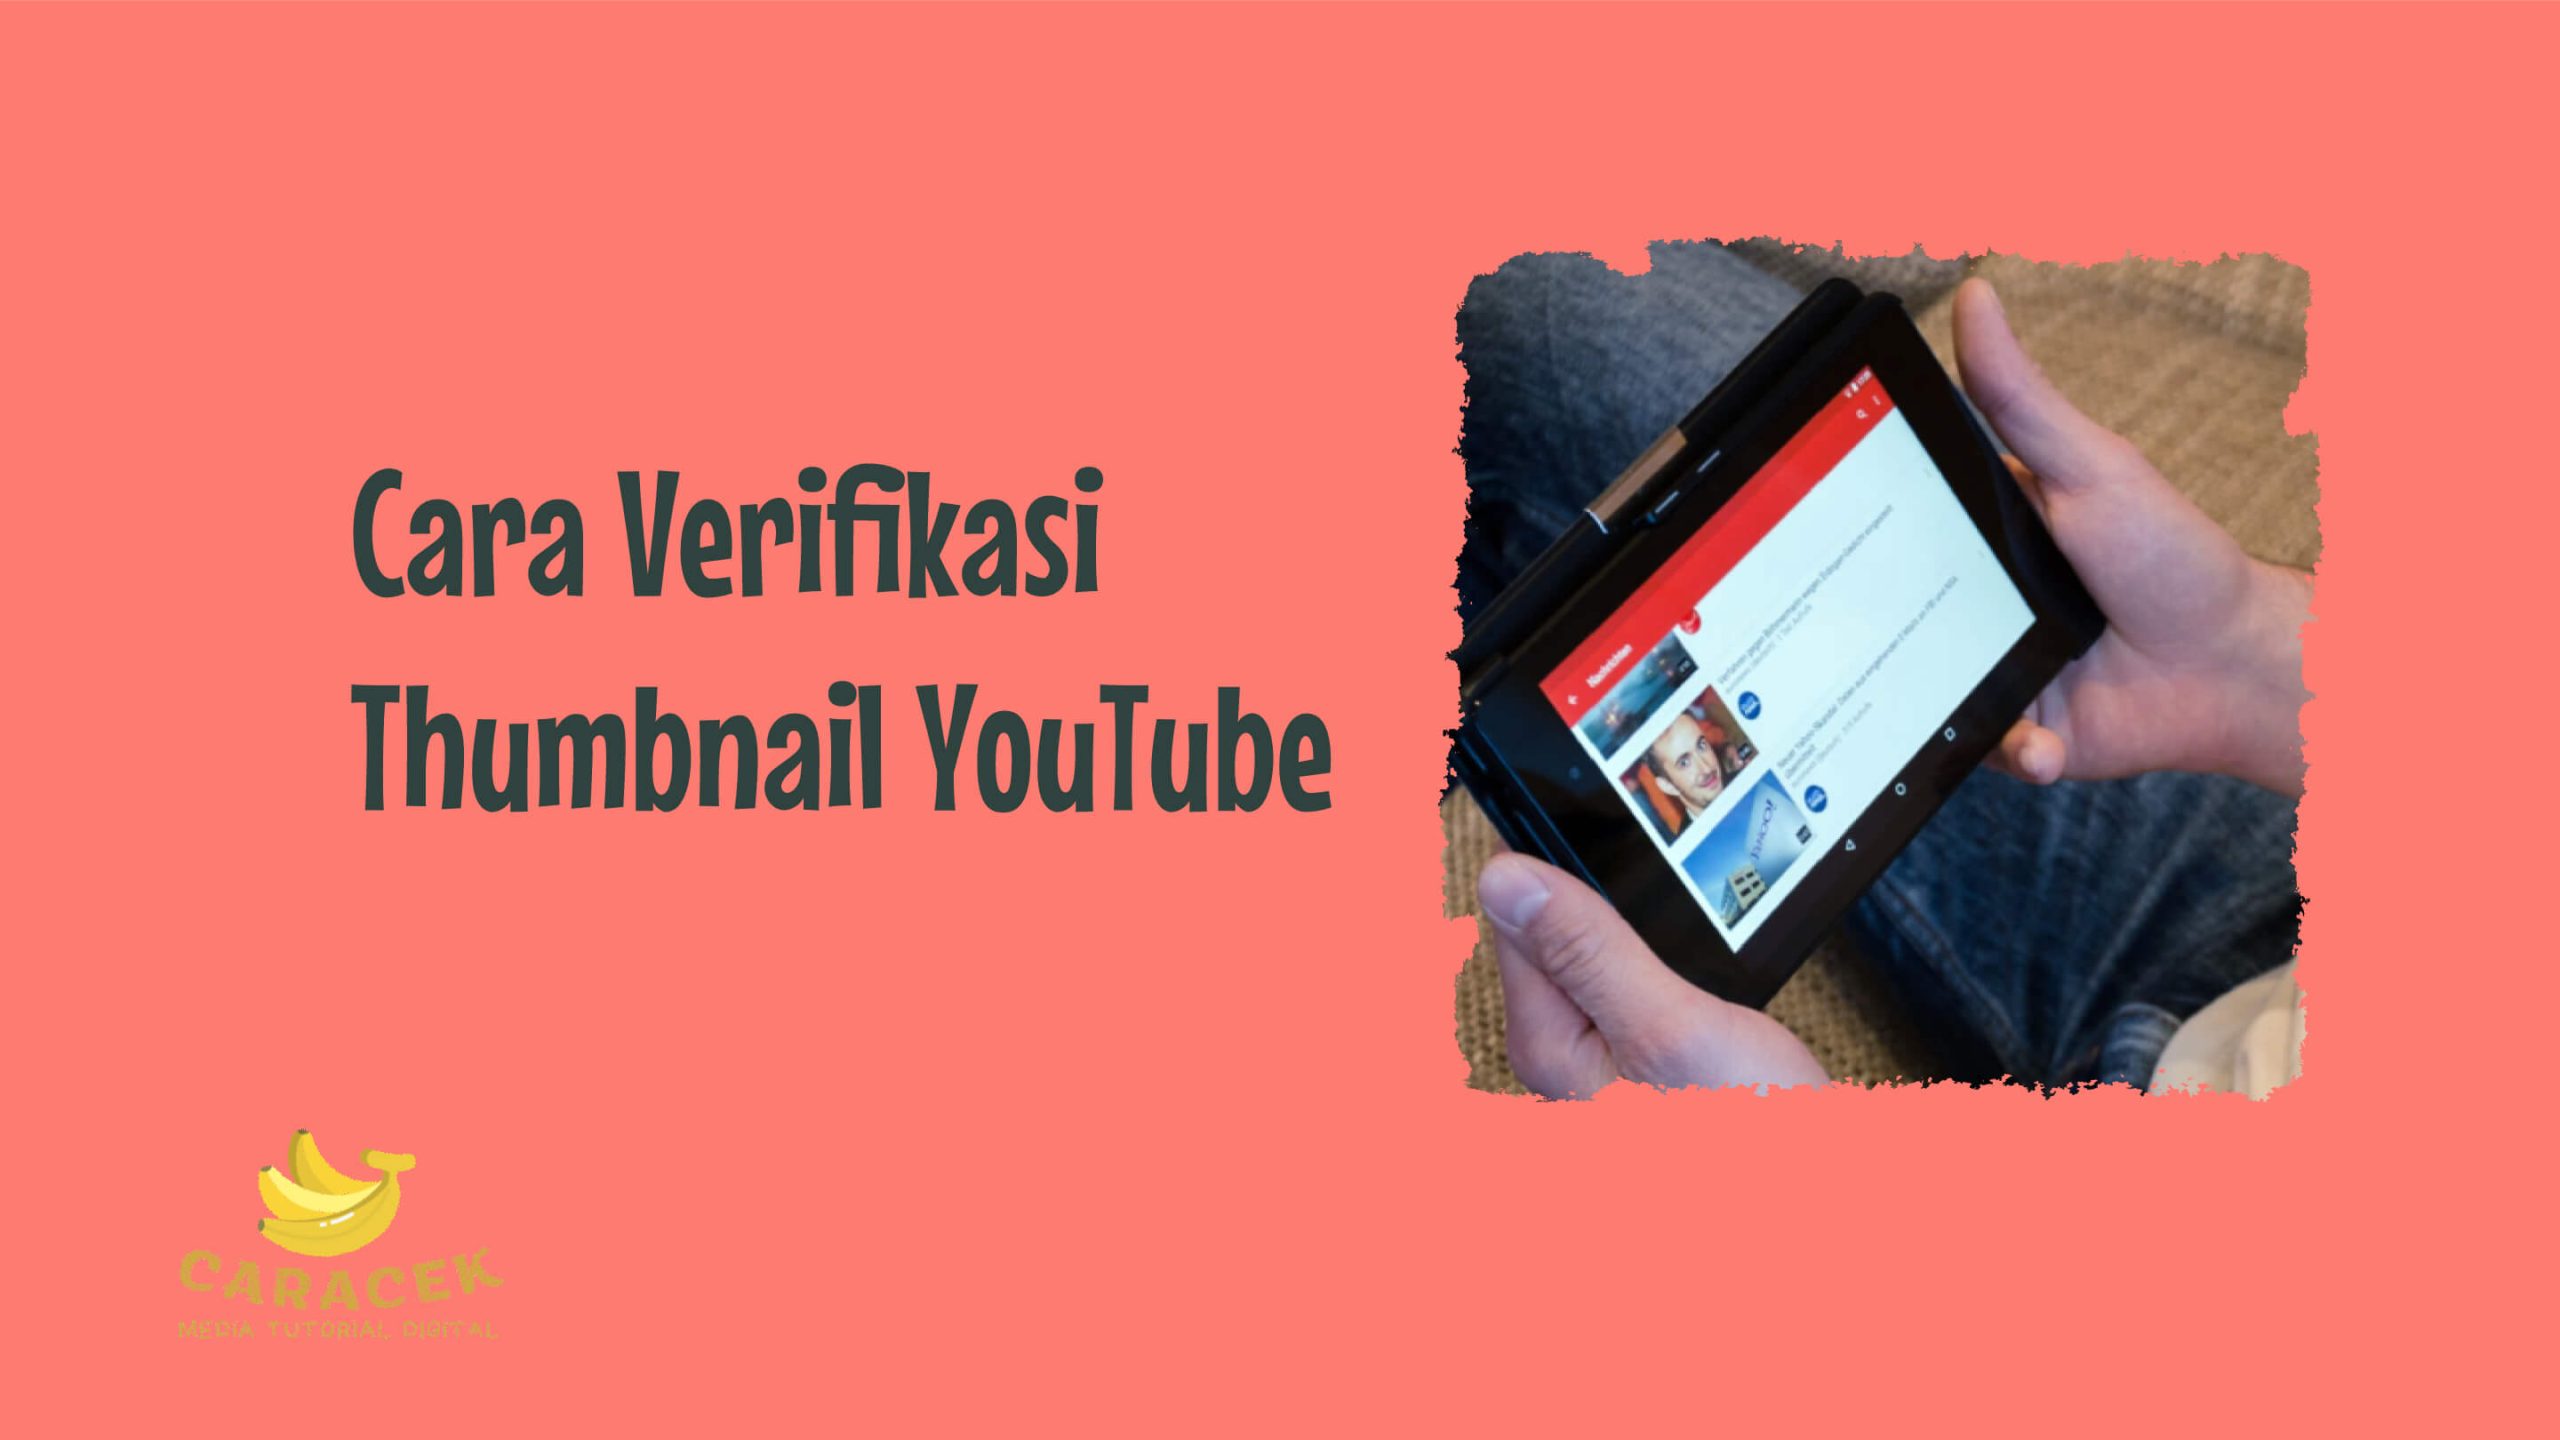 Cara verifikasi thumbnail YouTube